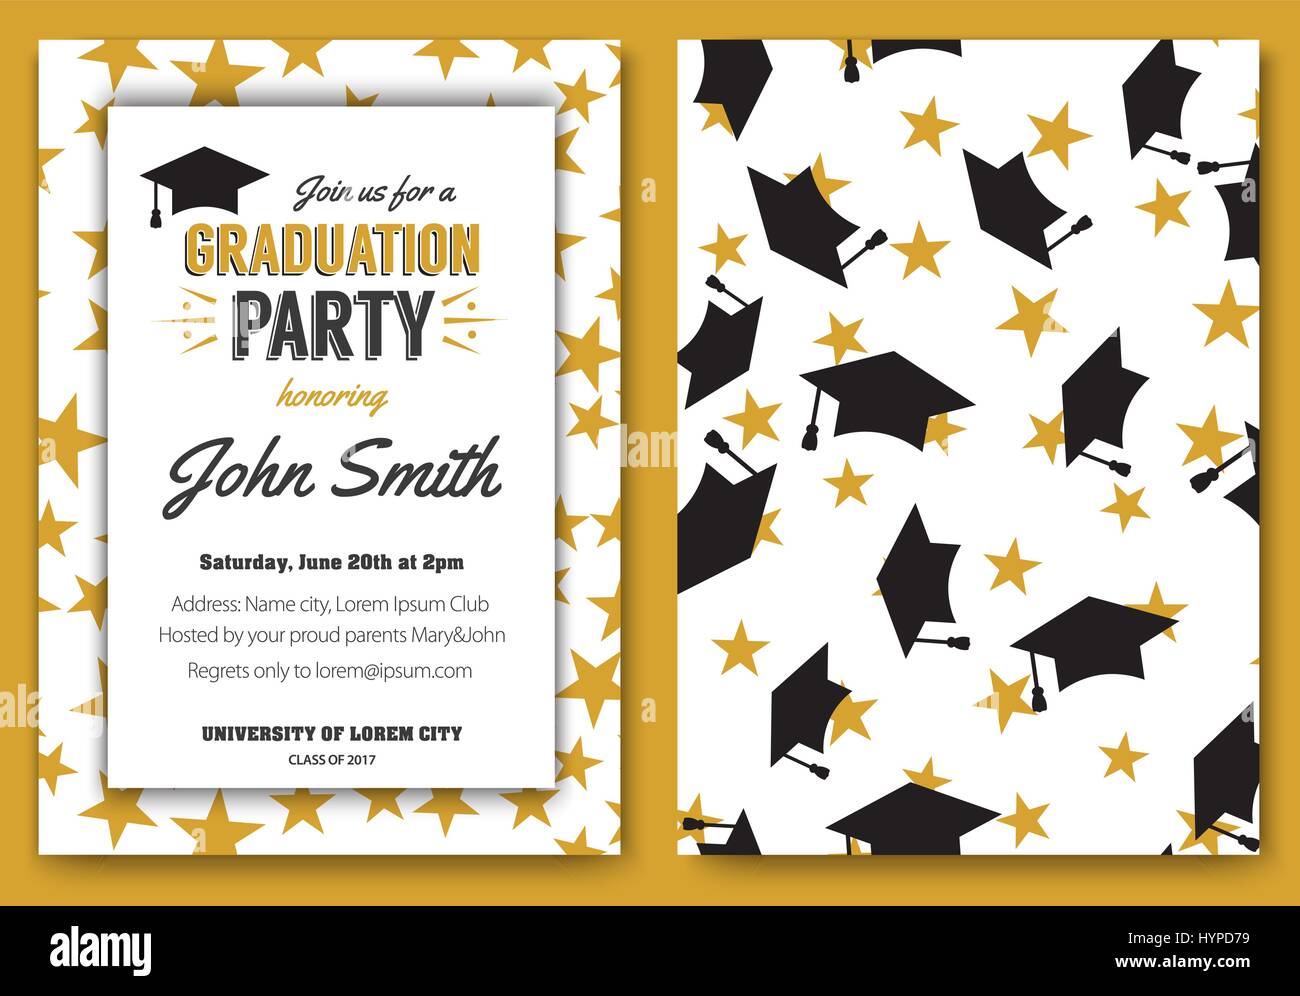 Graduation party vector template invitation Stock Vector